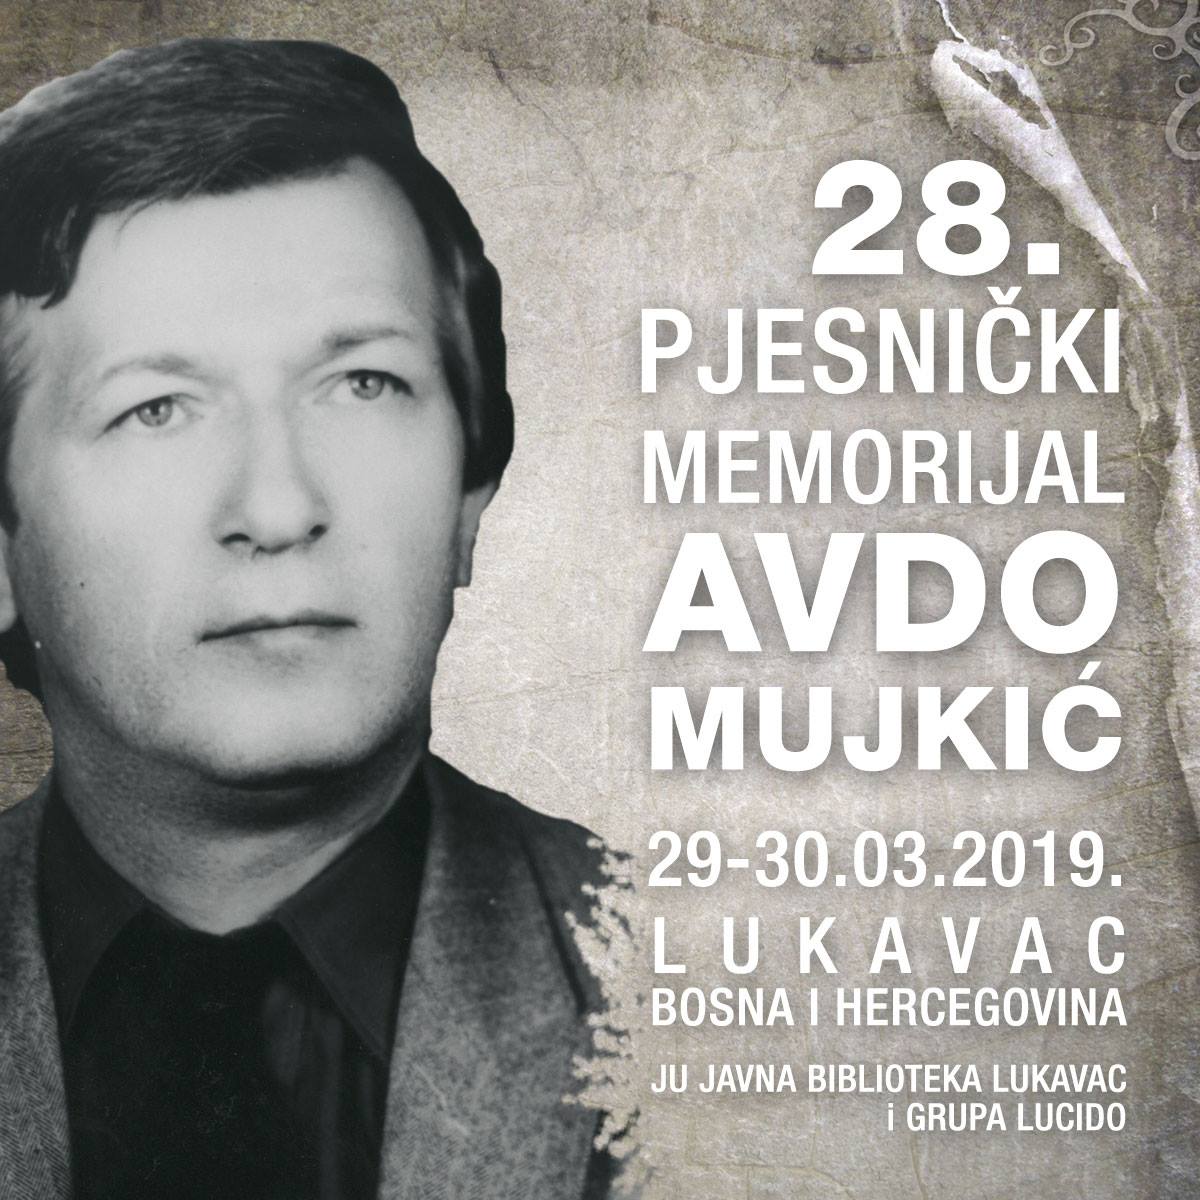 28. pjesnički memorijal Avdo Mujkić 2019